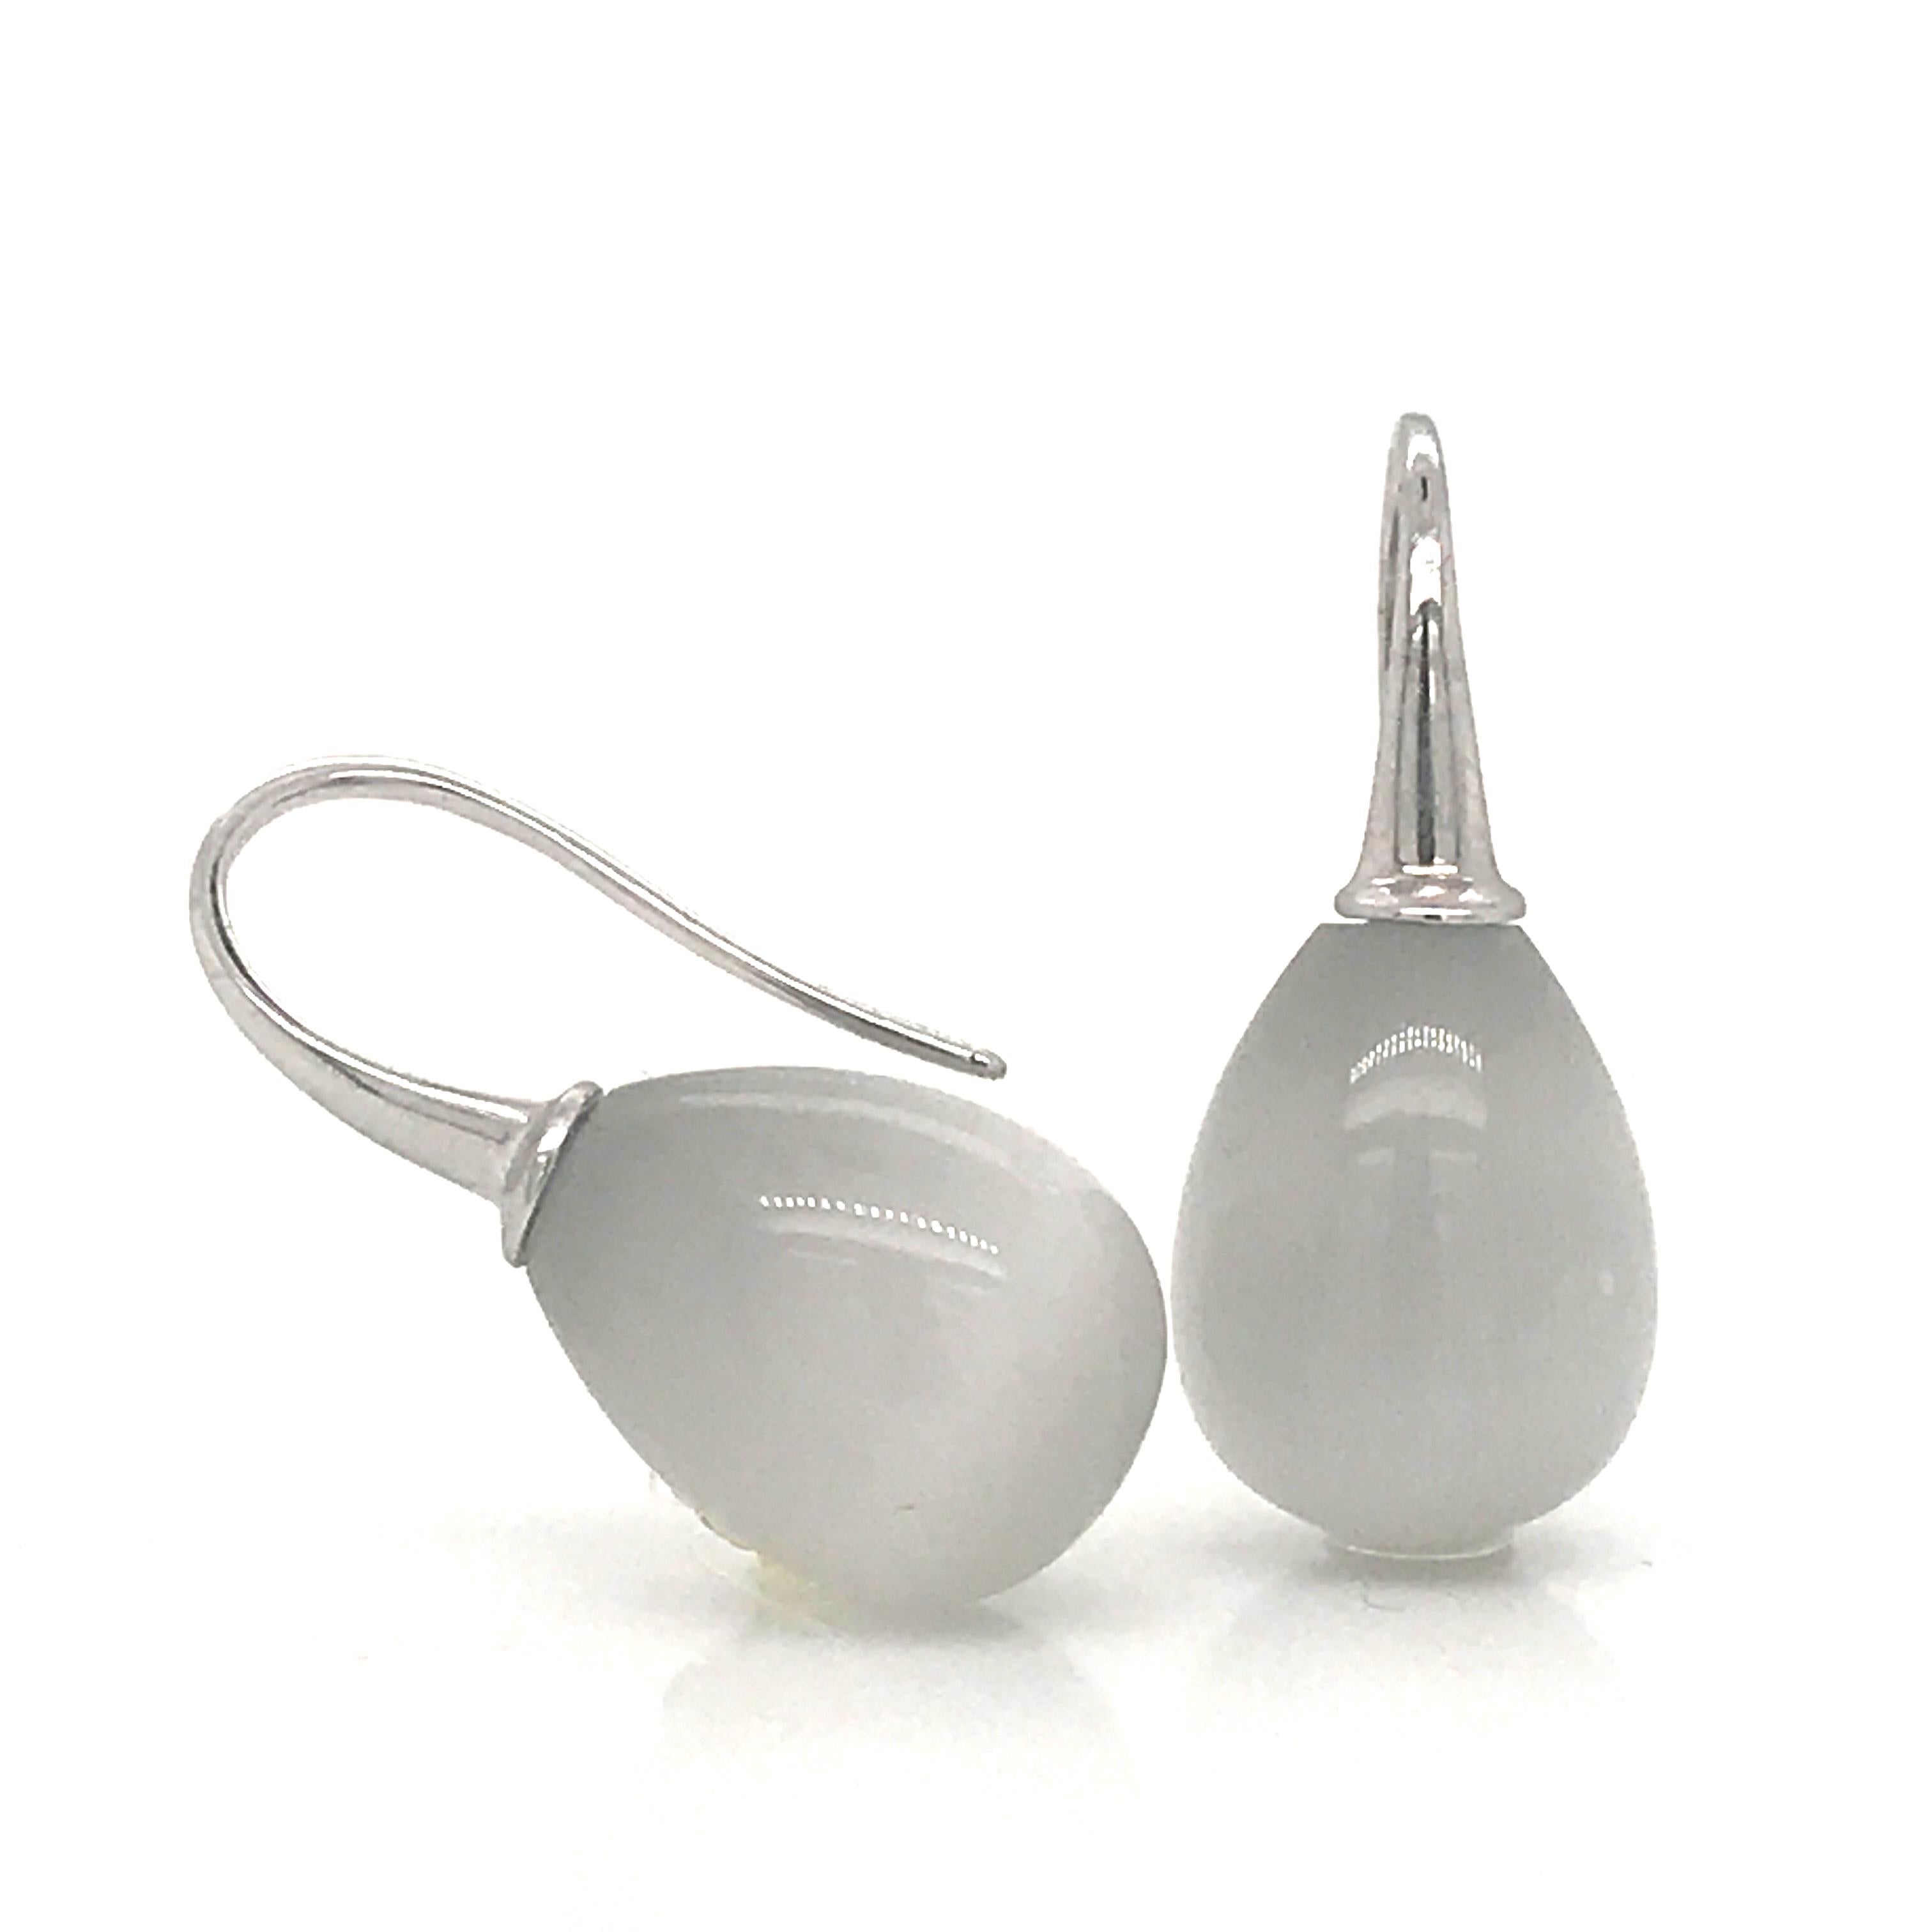 Discover this Grey Quartz and White Gold 18 Karat Drop Earrings.
Grey Quartz
White Gold 18 Karat 2 grams 